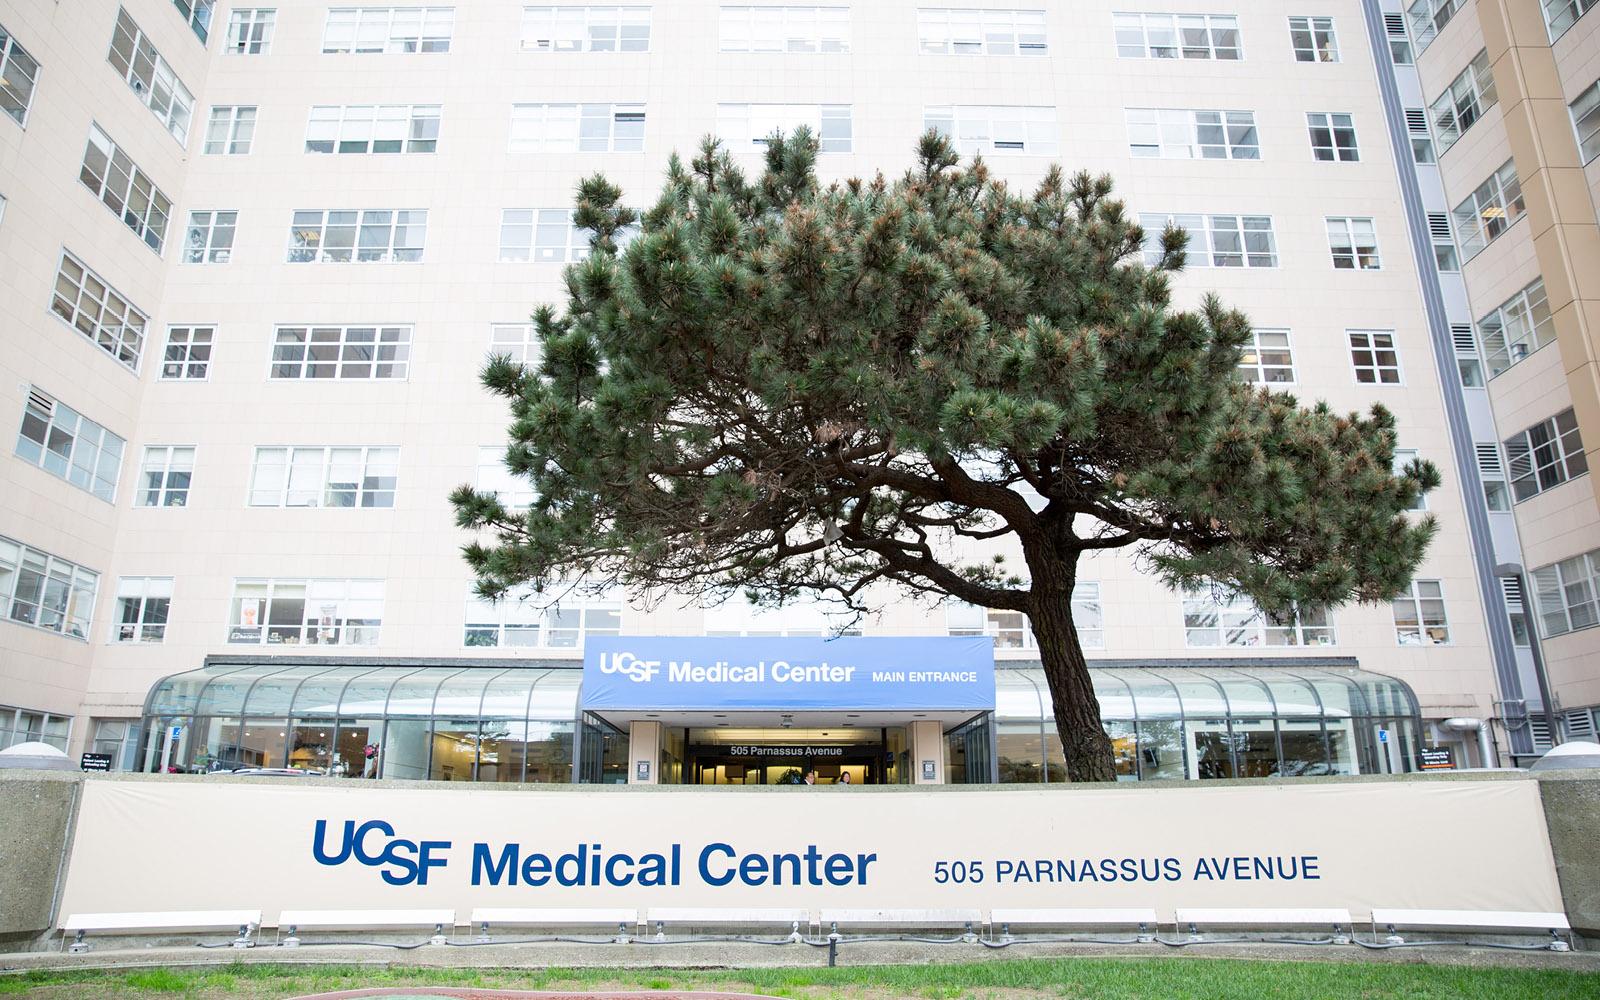 UCSF Medical Center at Parnassus